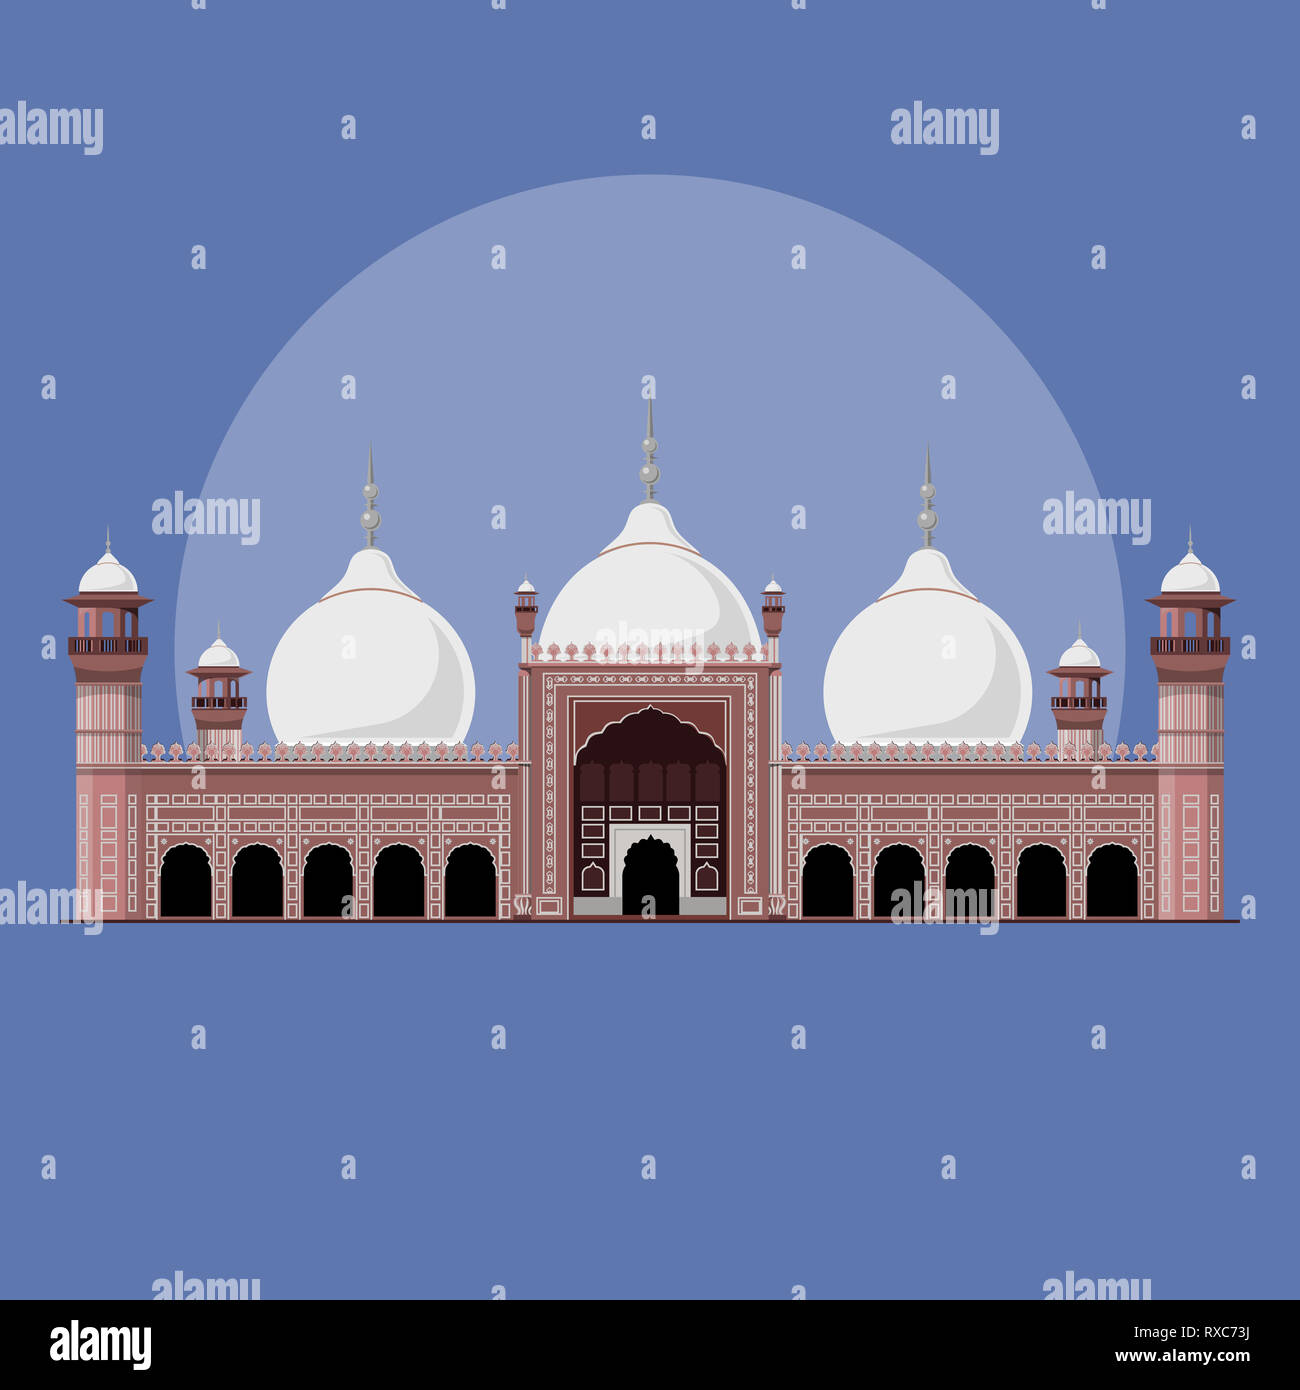 How to draw Badshahi Mosque, Lahore